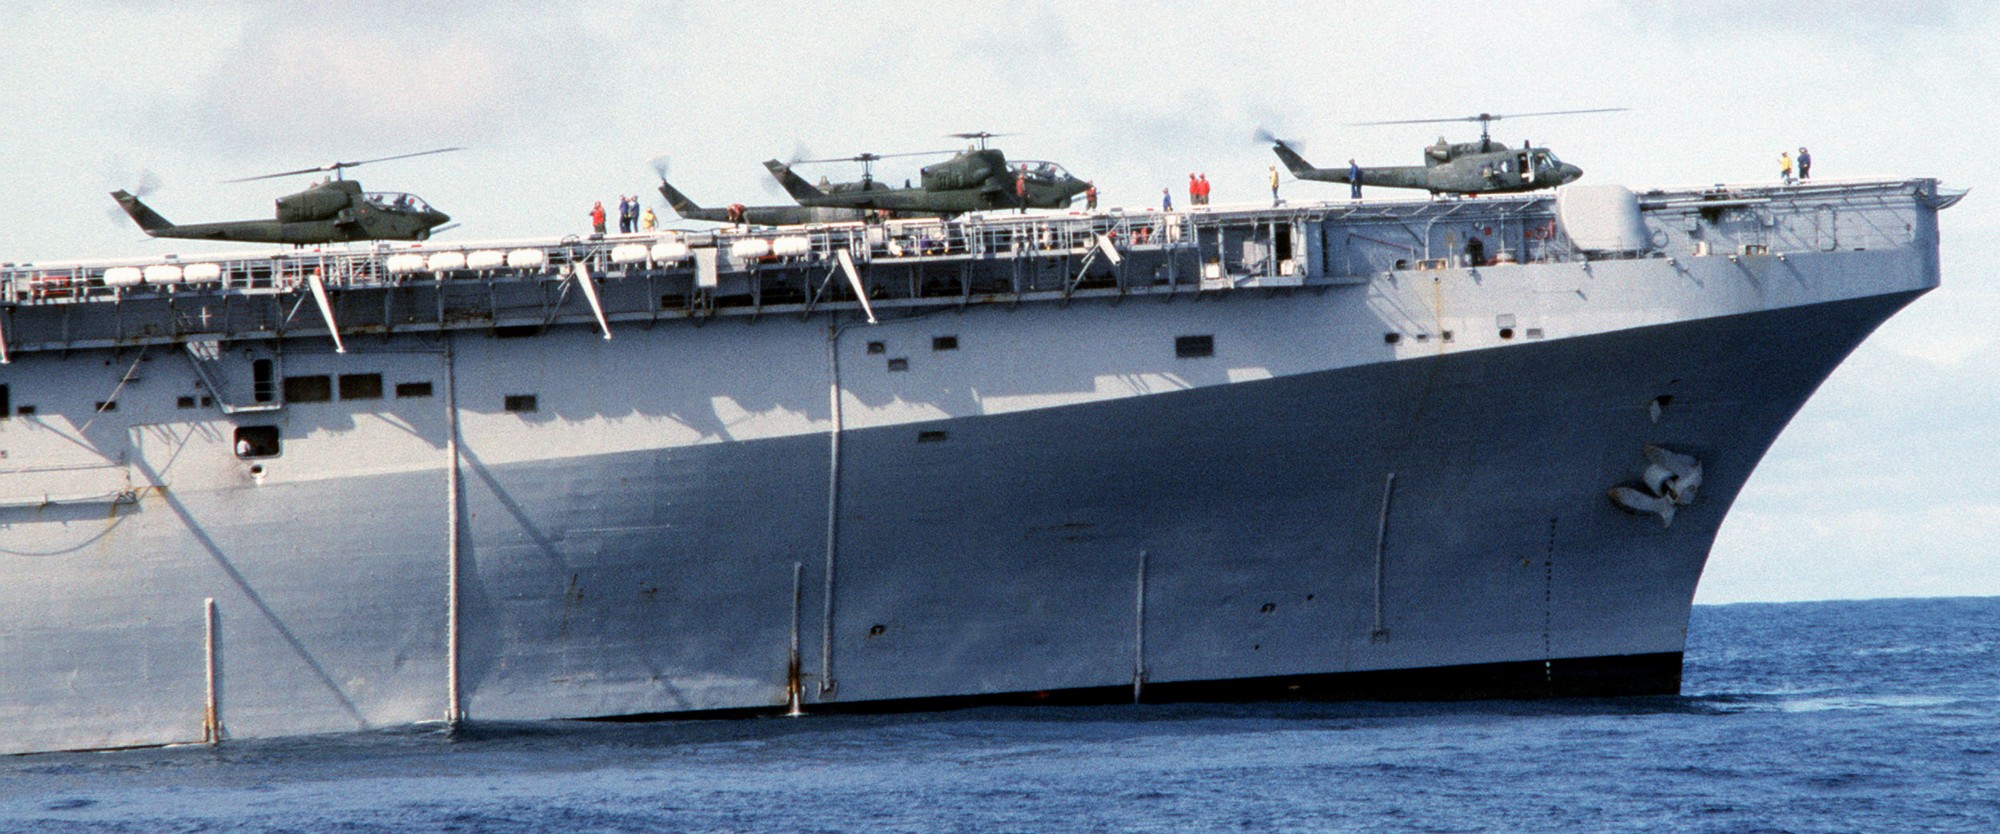 lha-4 uss nassau tarawa class amphibious assault ship us navy 102 exercise ahuas tara honduras 1984